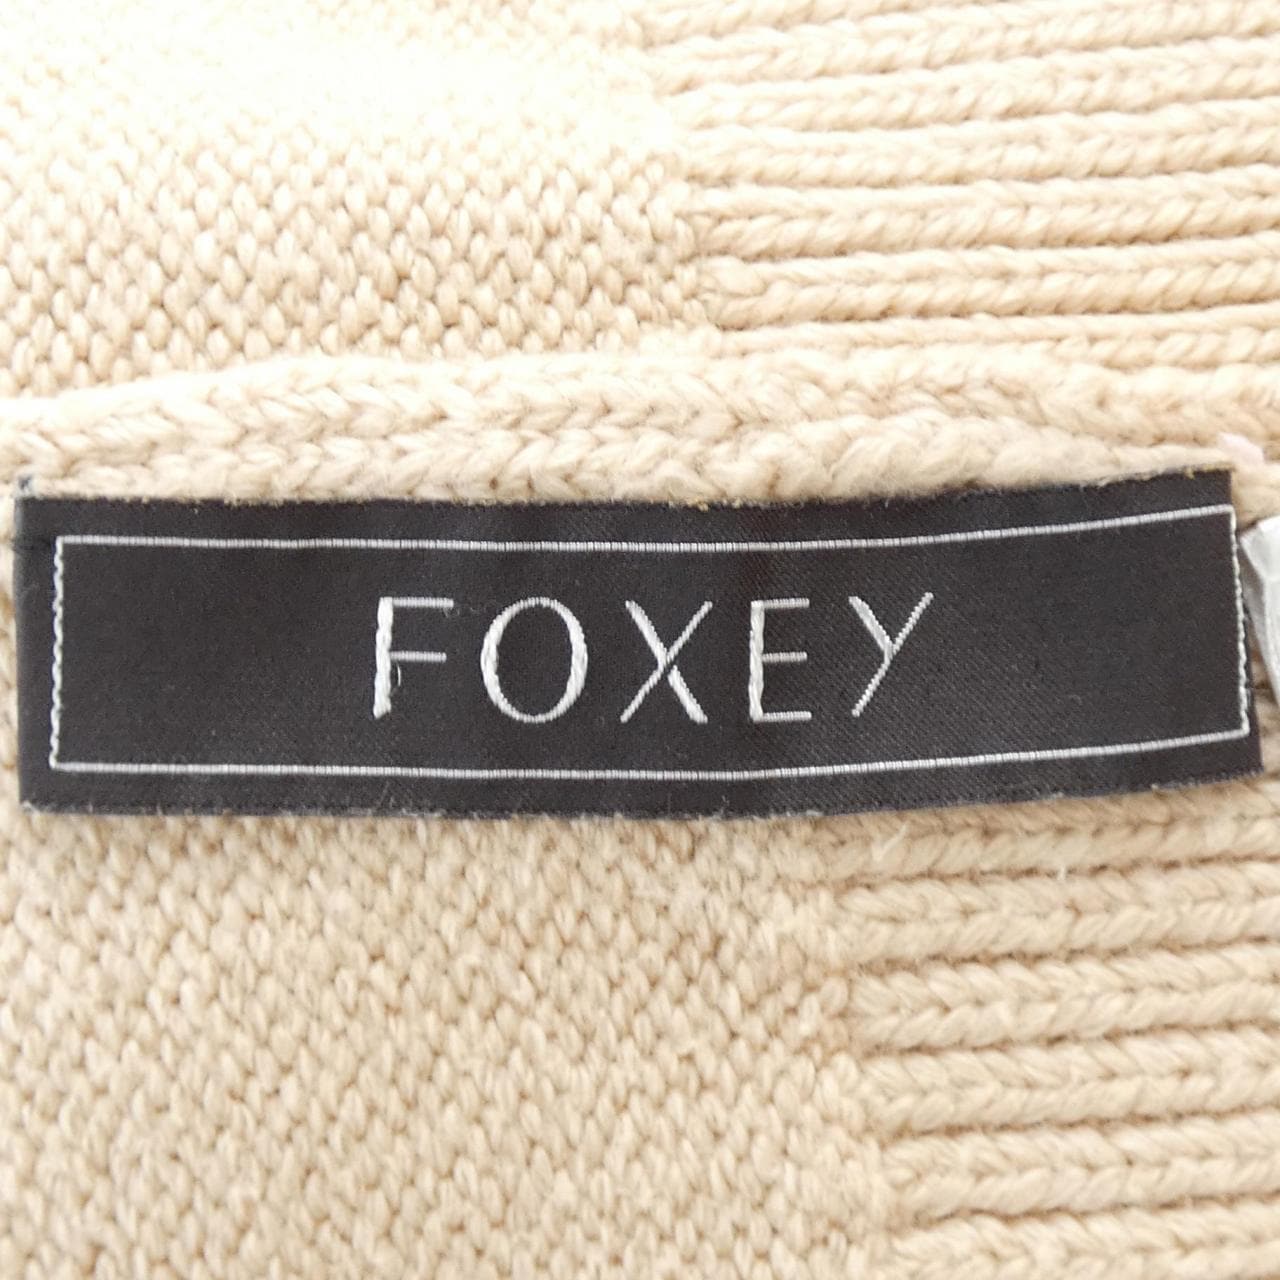 Foxy FOXEY cardigan